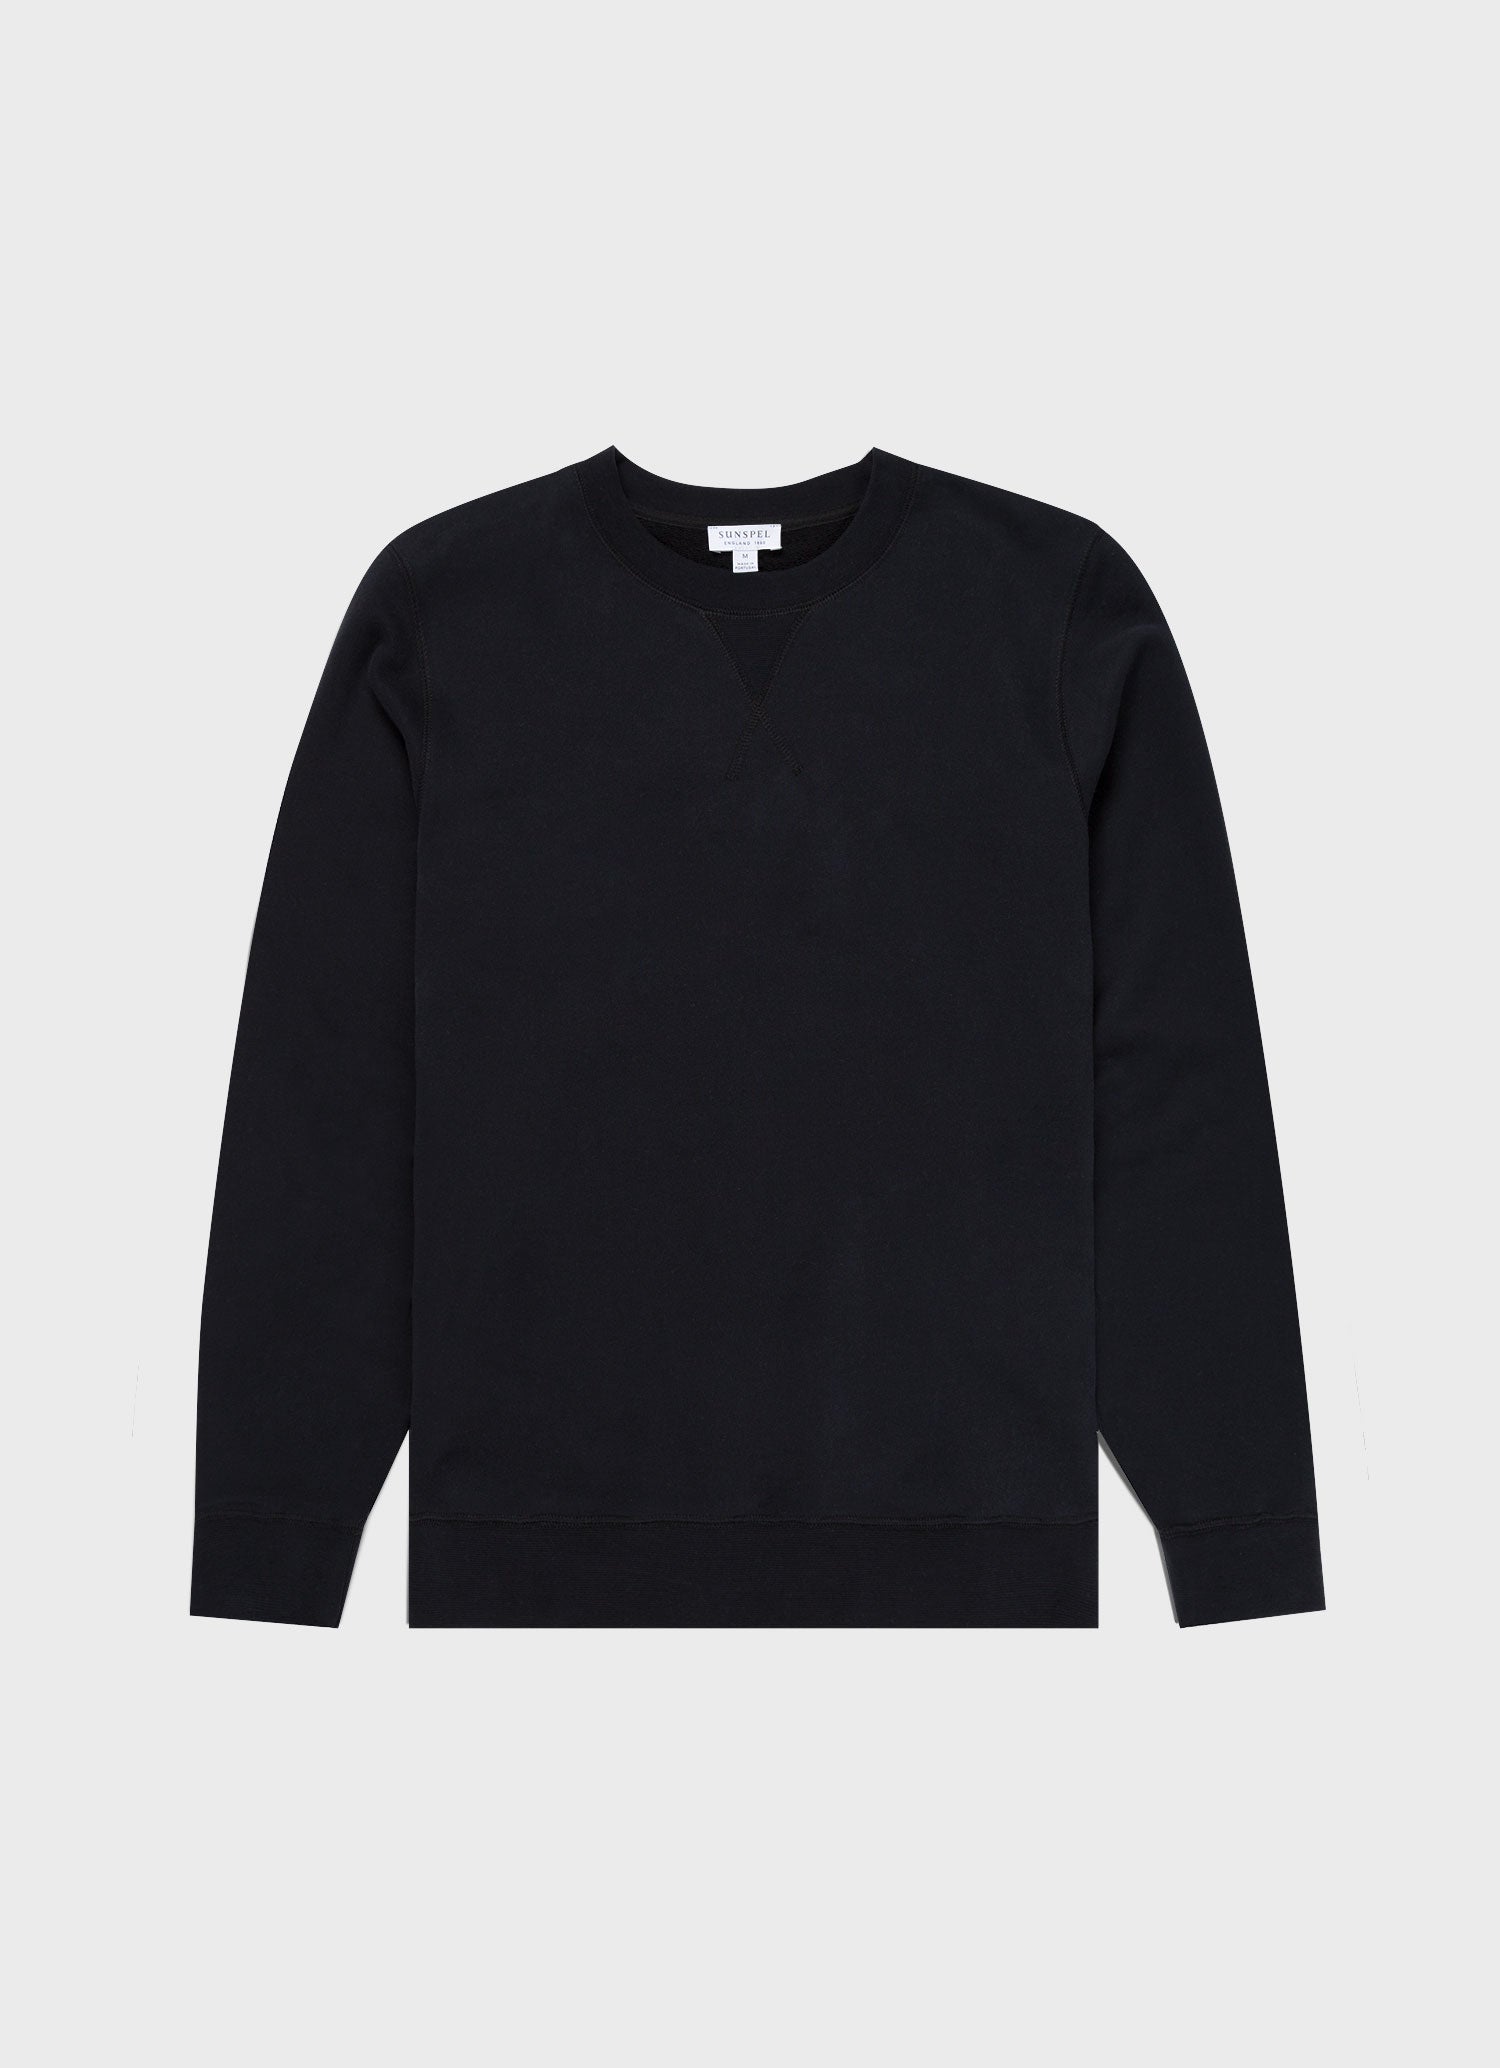 Men's Loopback Sweatshirt in Black | Sunspel